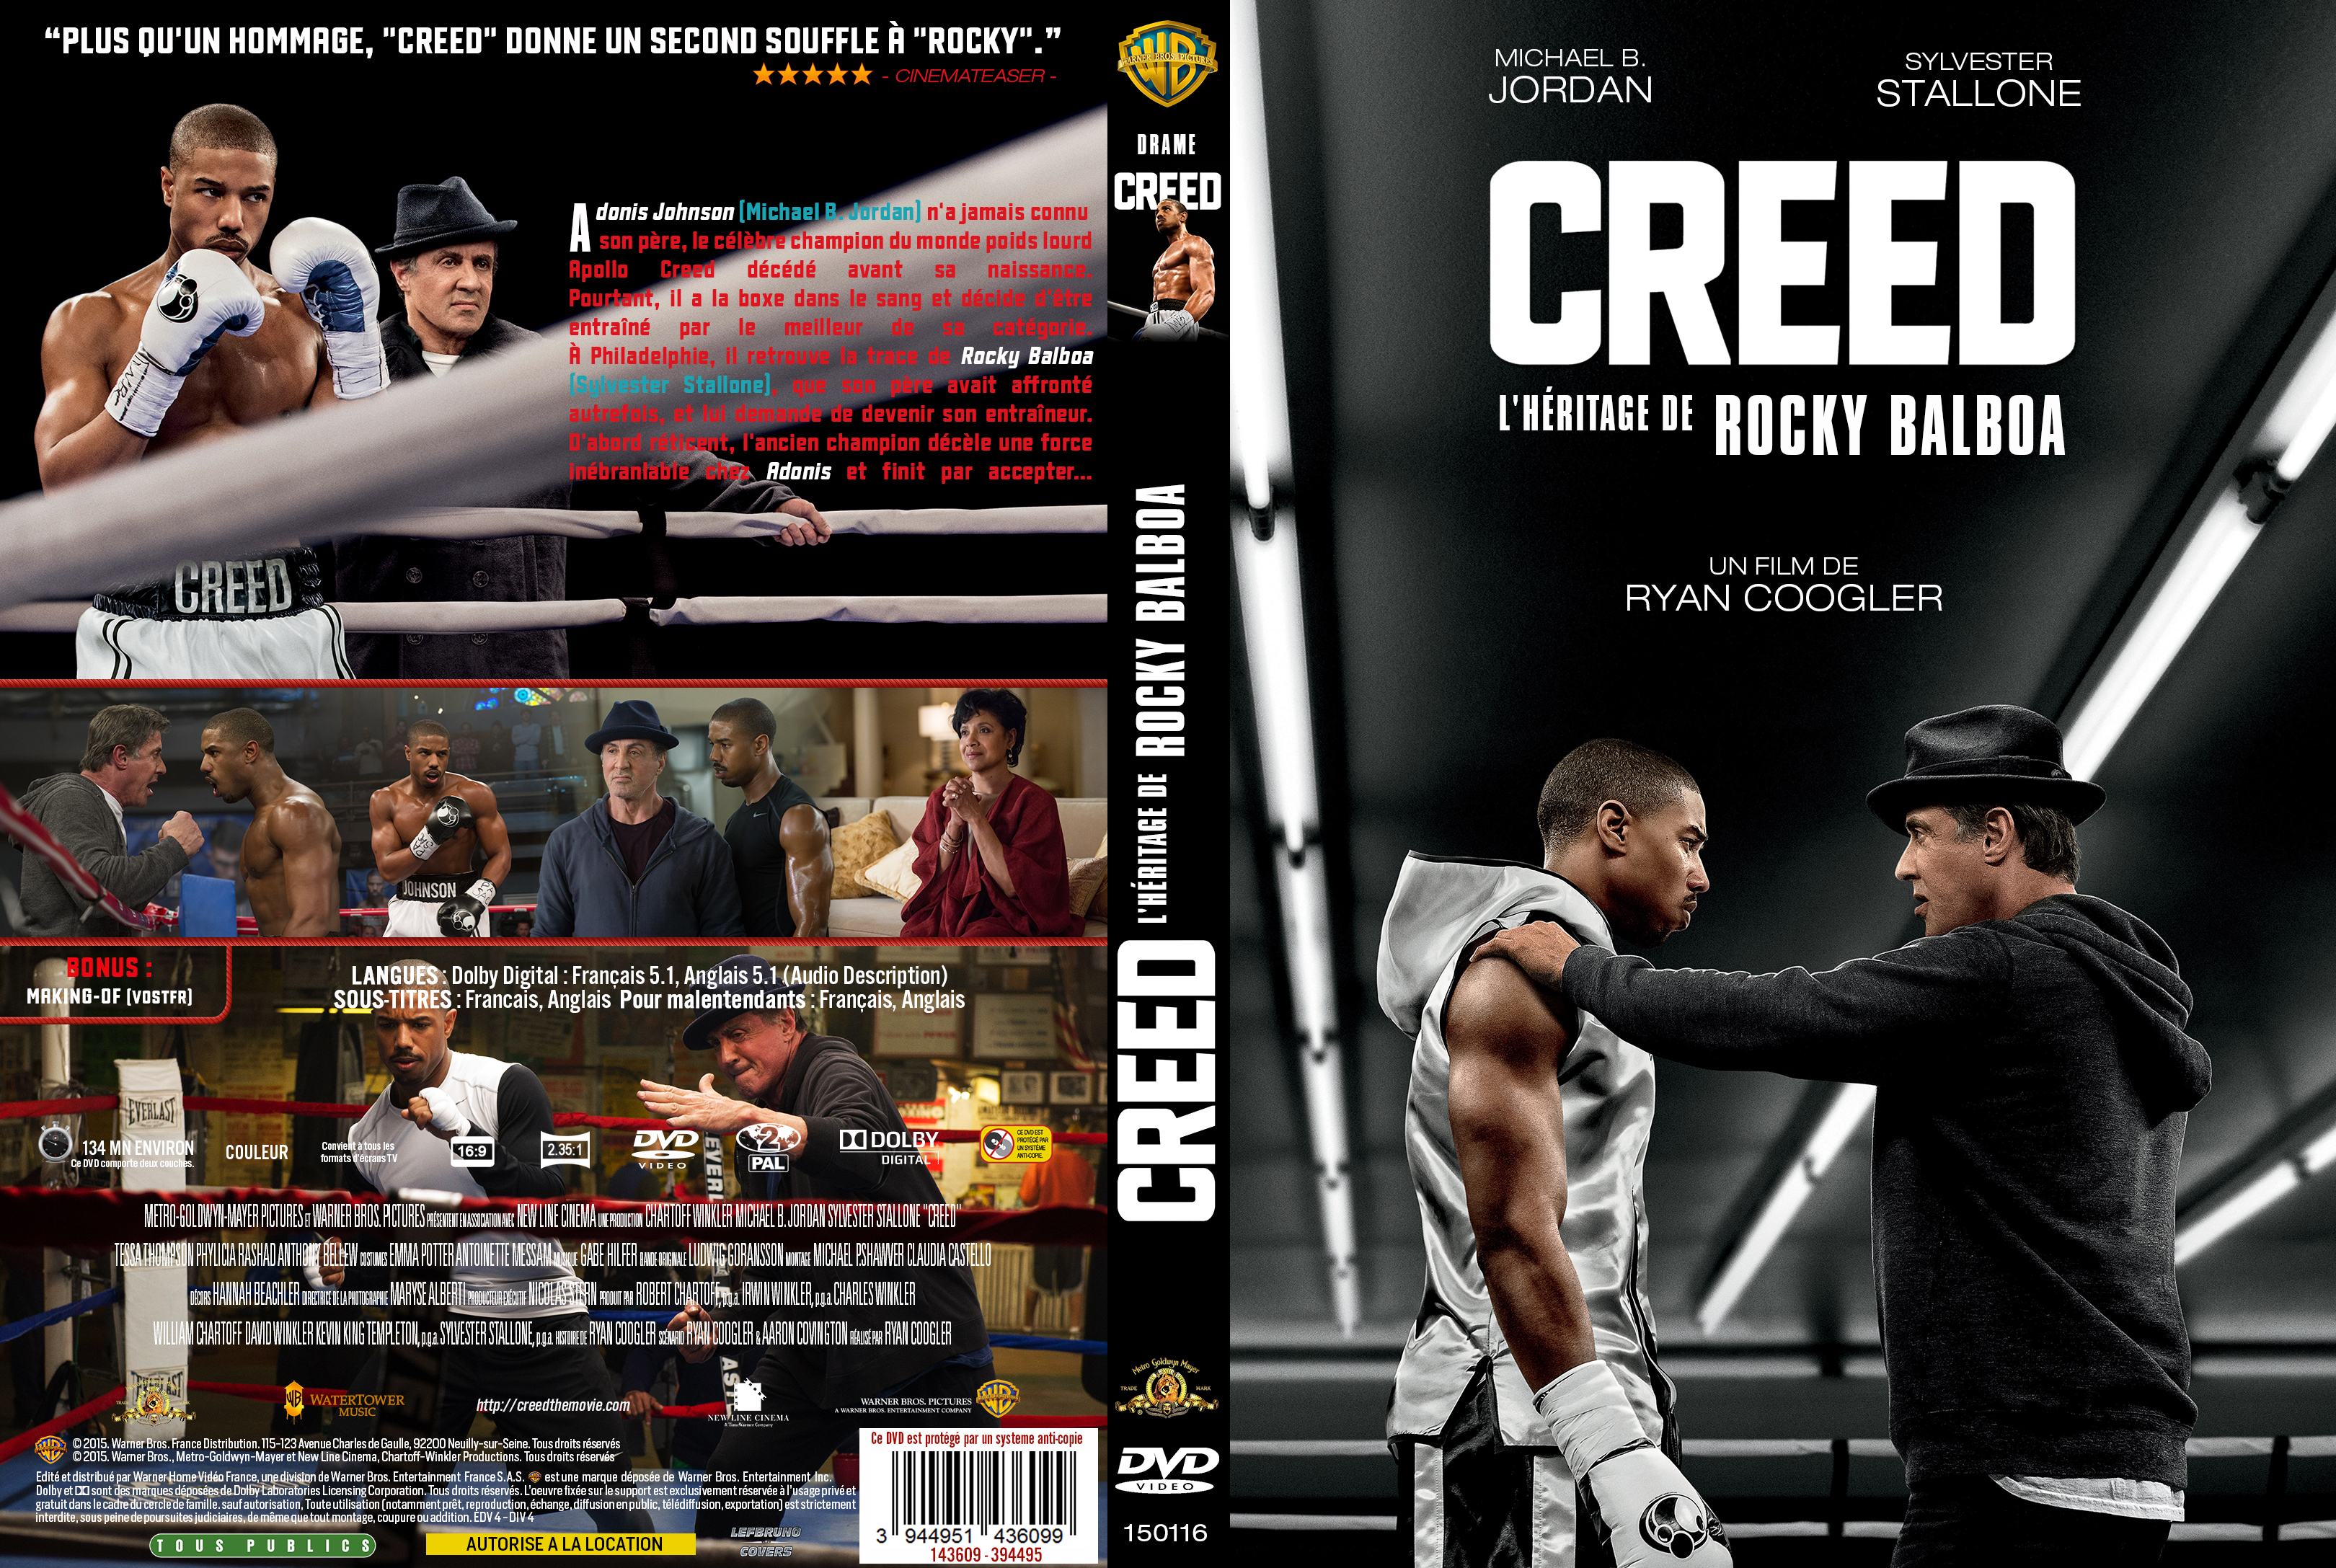 Jaquette DVD Creed custom